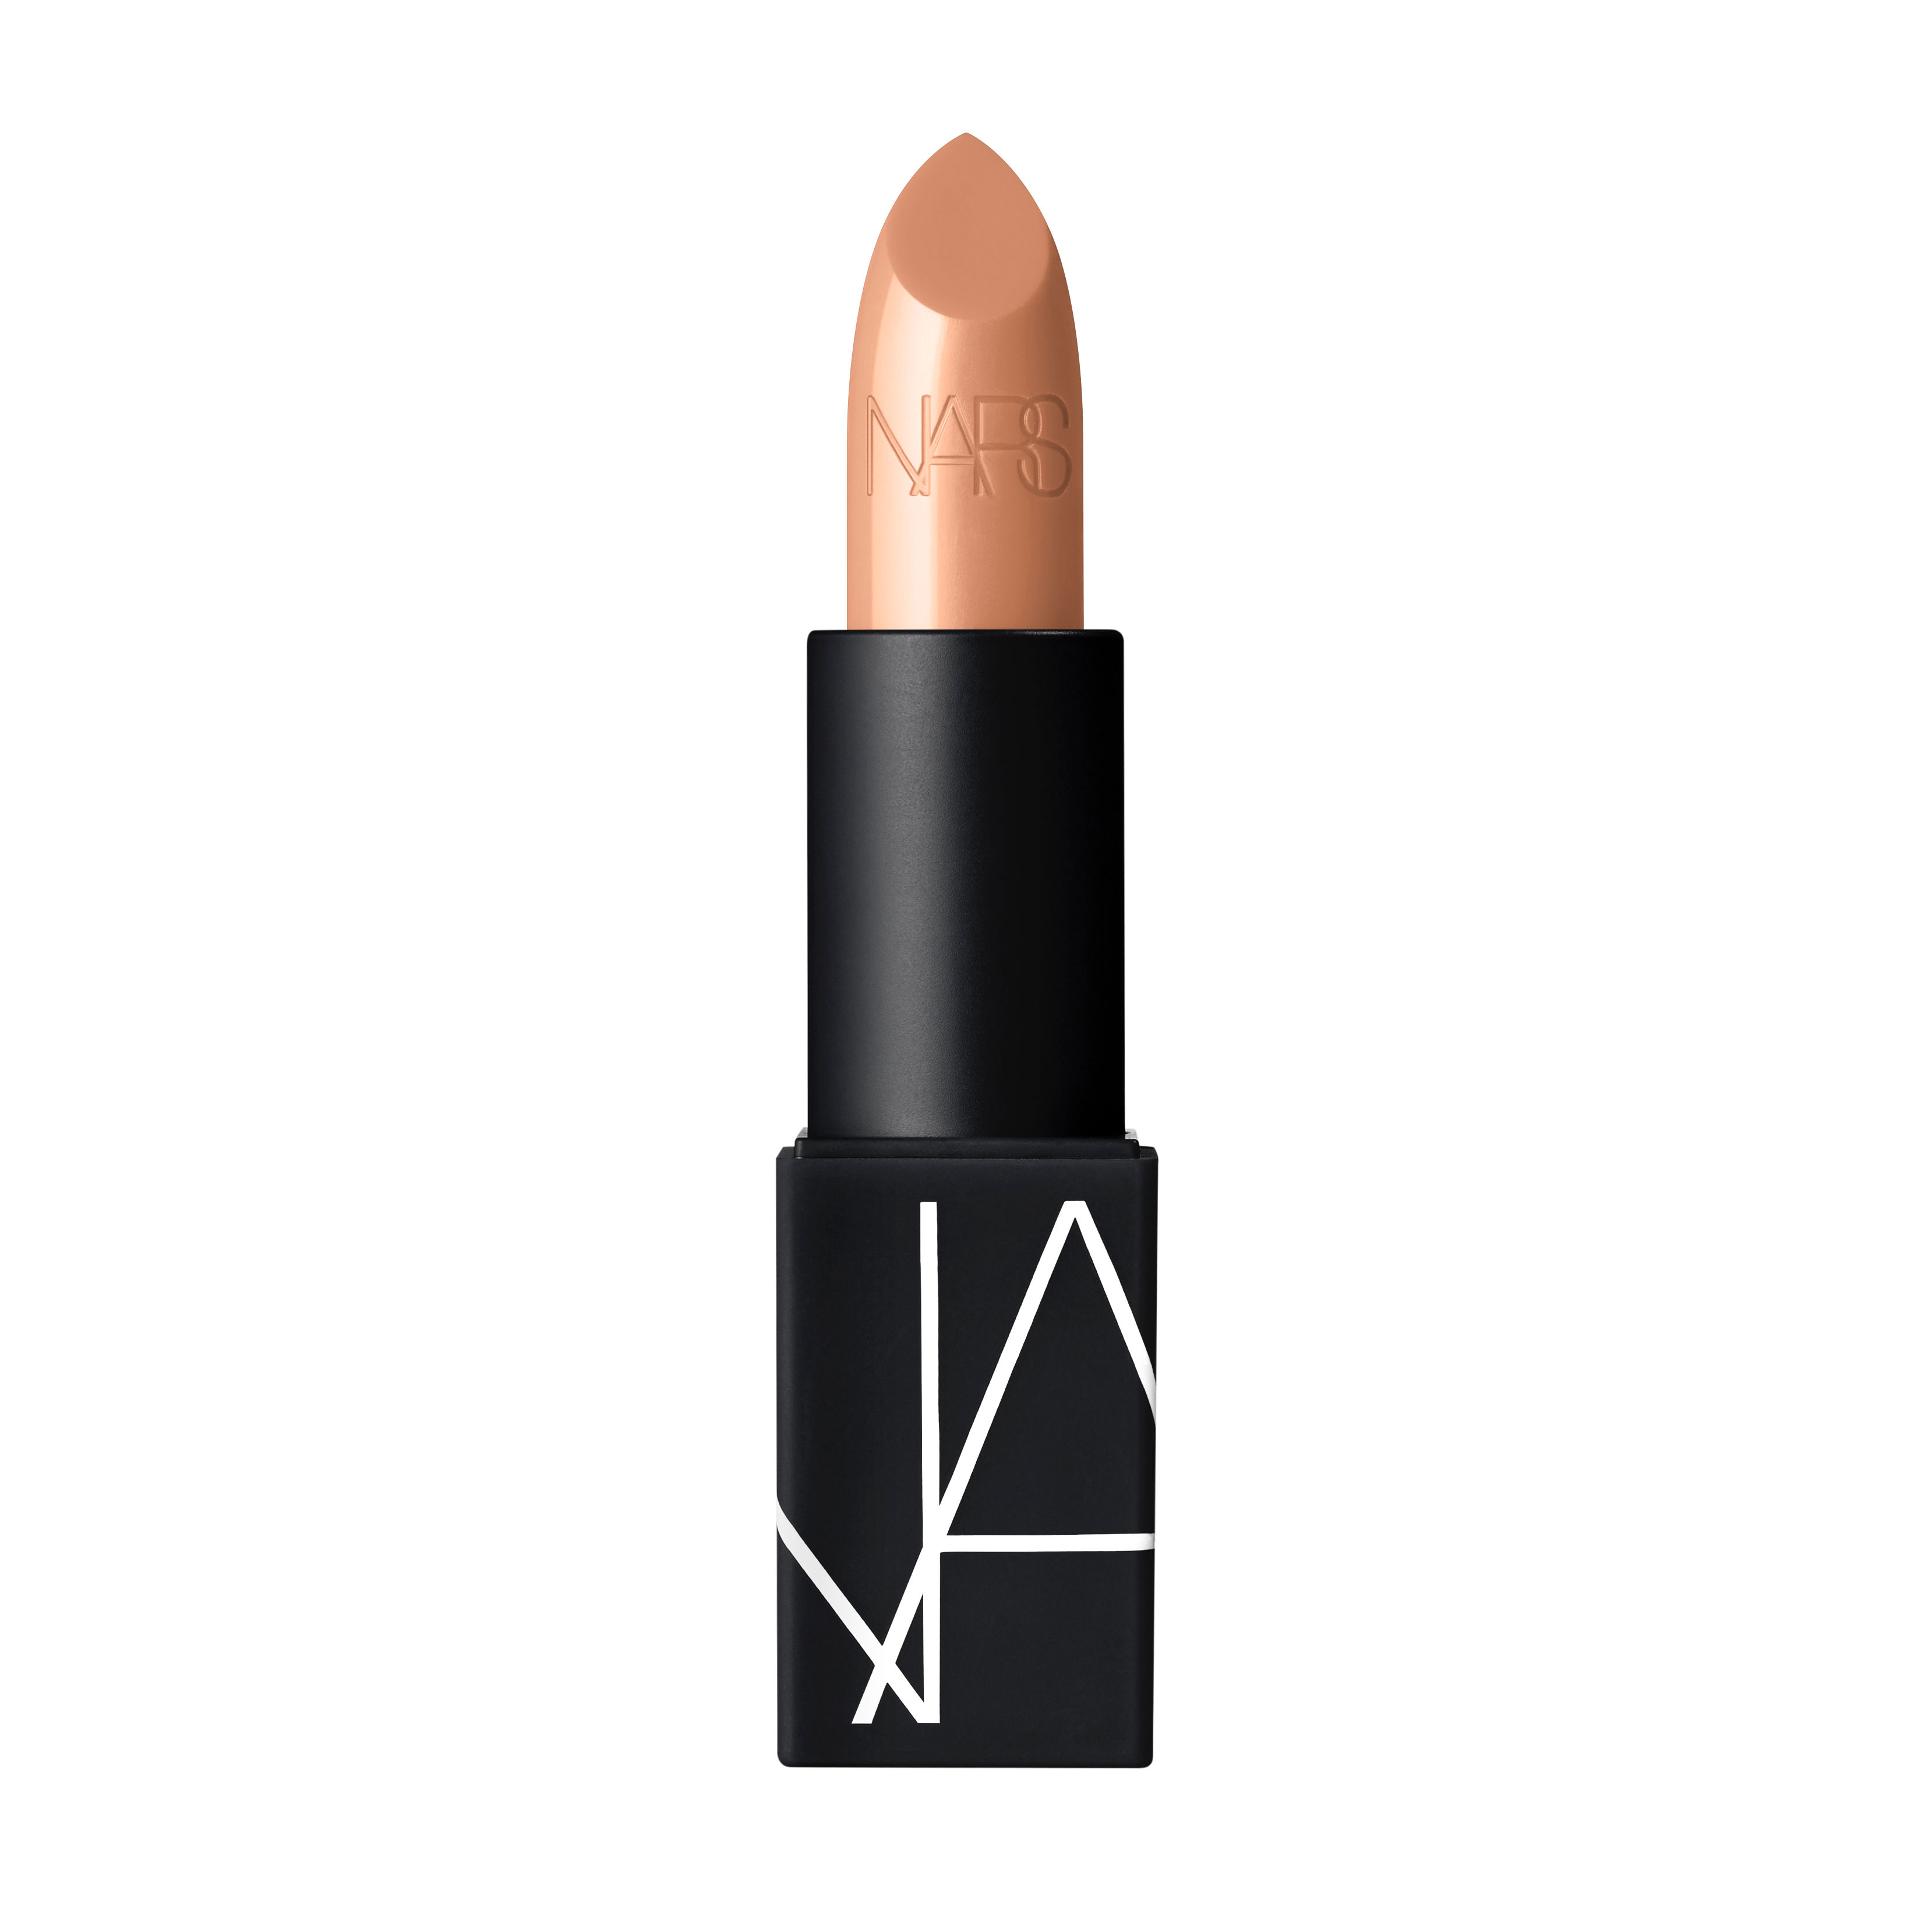 NARS Belle du Jour Sheer Lipstick Product Image